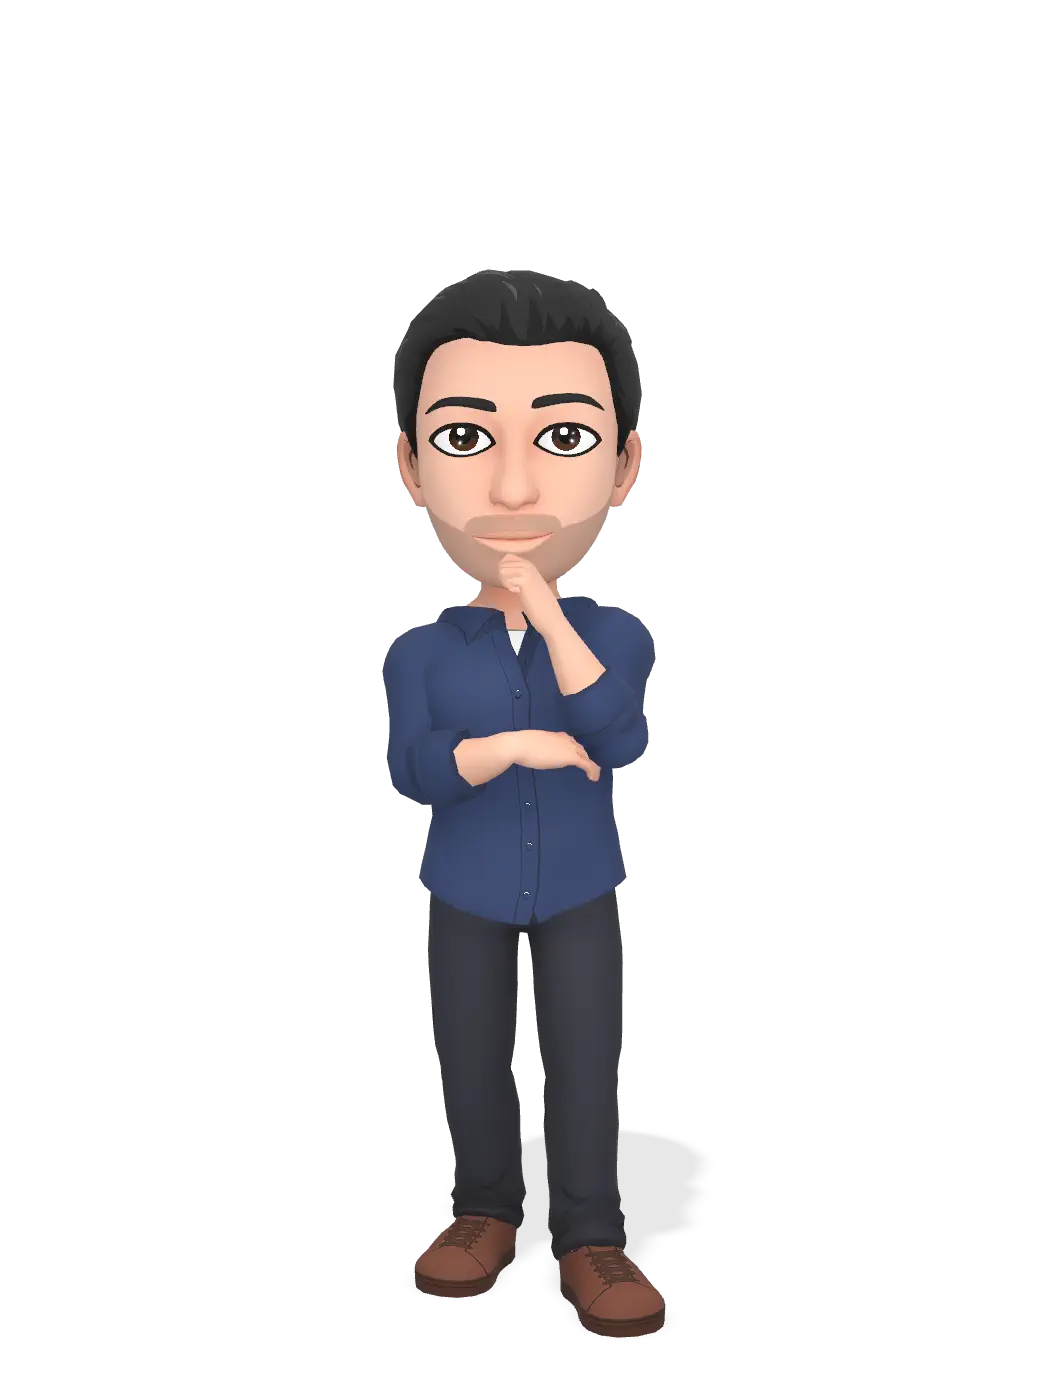 3D Bitmoji for ratkutti avatar